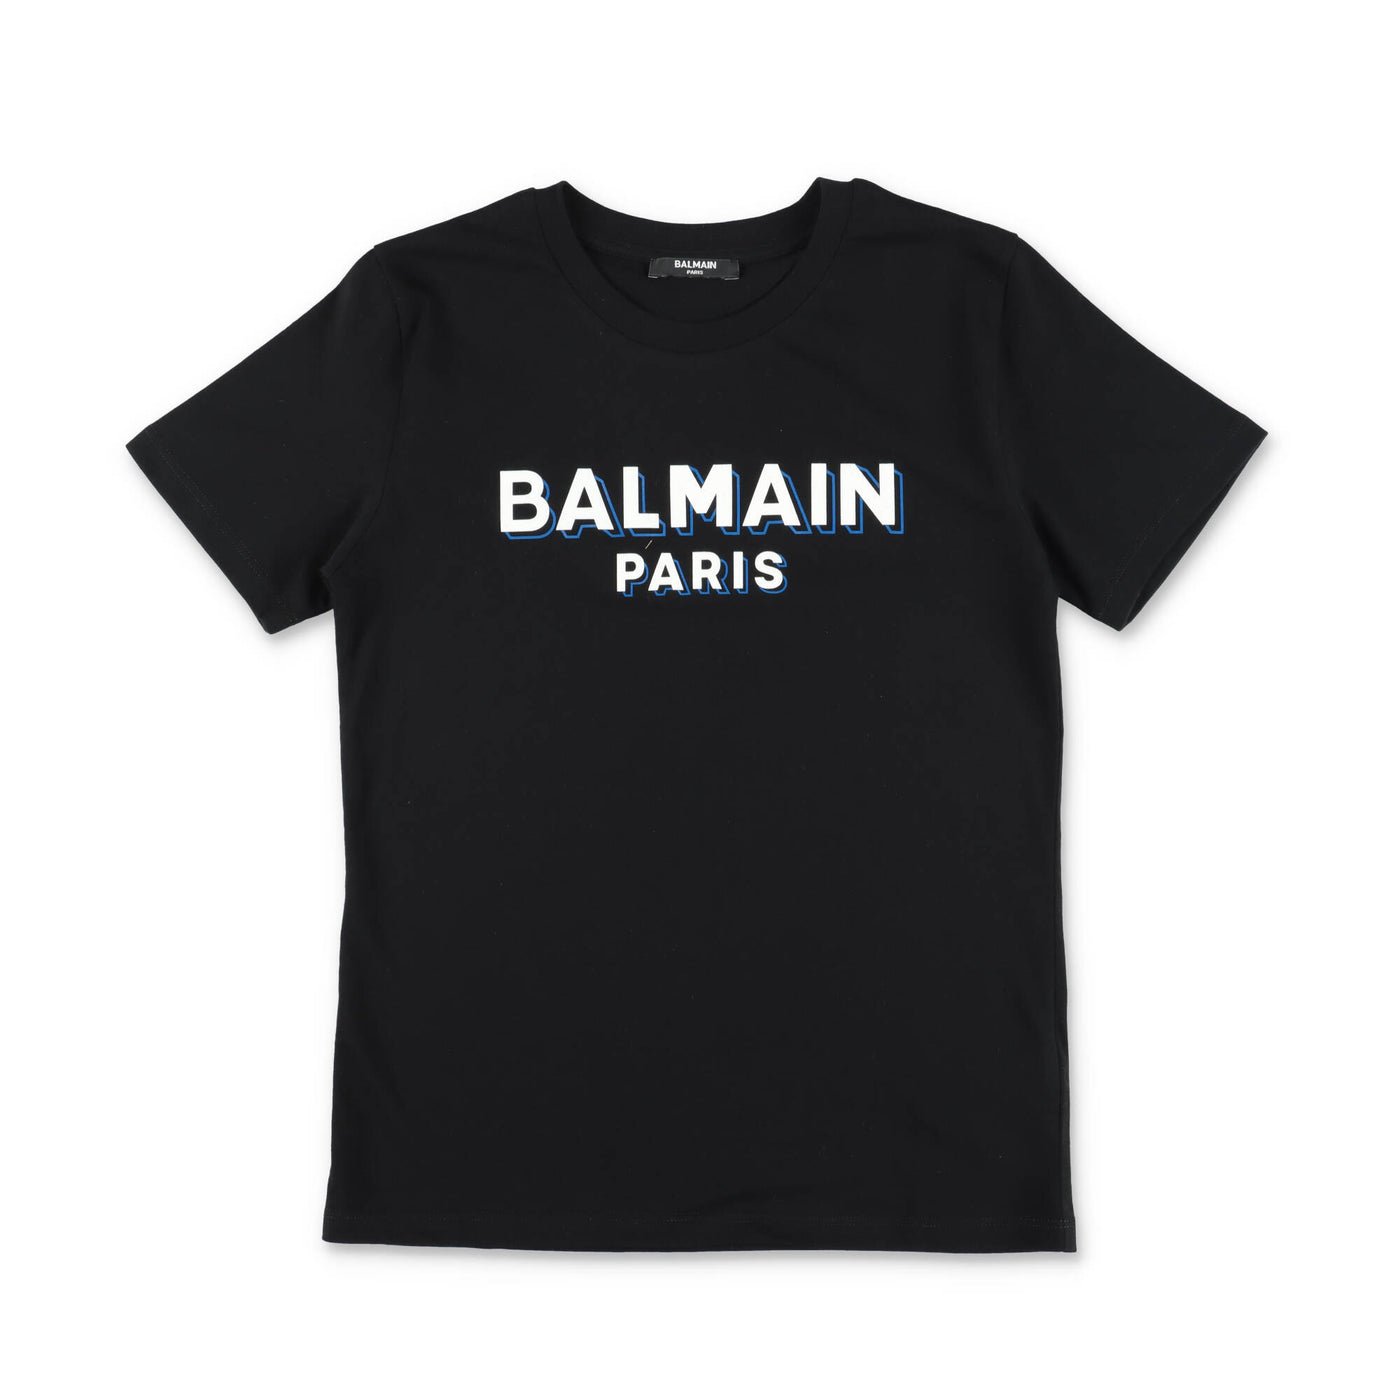 Black cotton jersey boy BALMAIN t-shirt - Carofiglio Junior